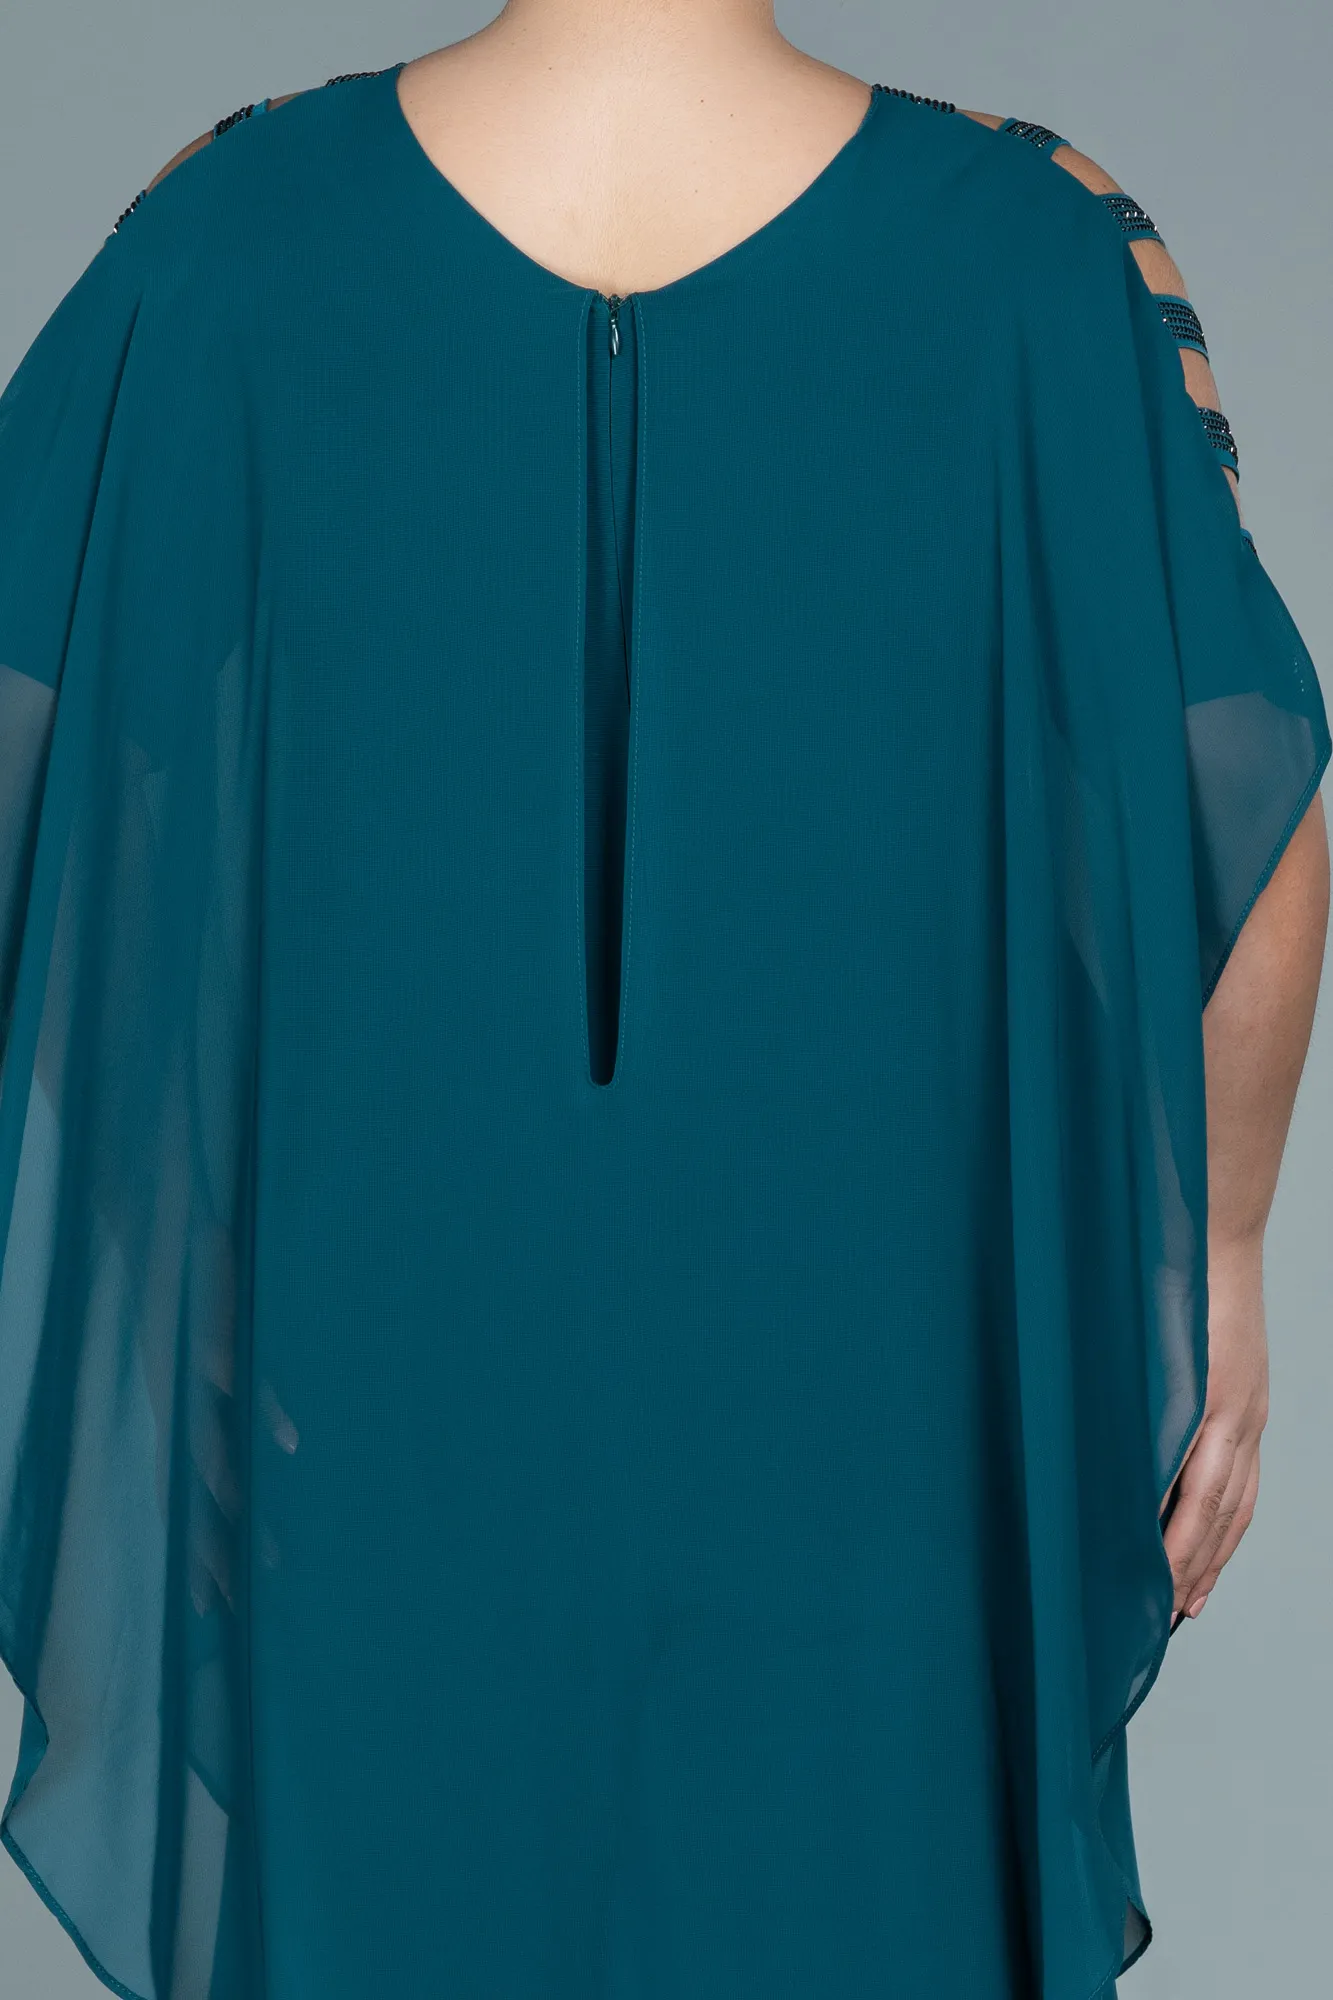 Green-Chiffon Plus Size Evening Dress ABT080